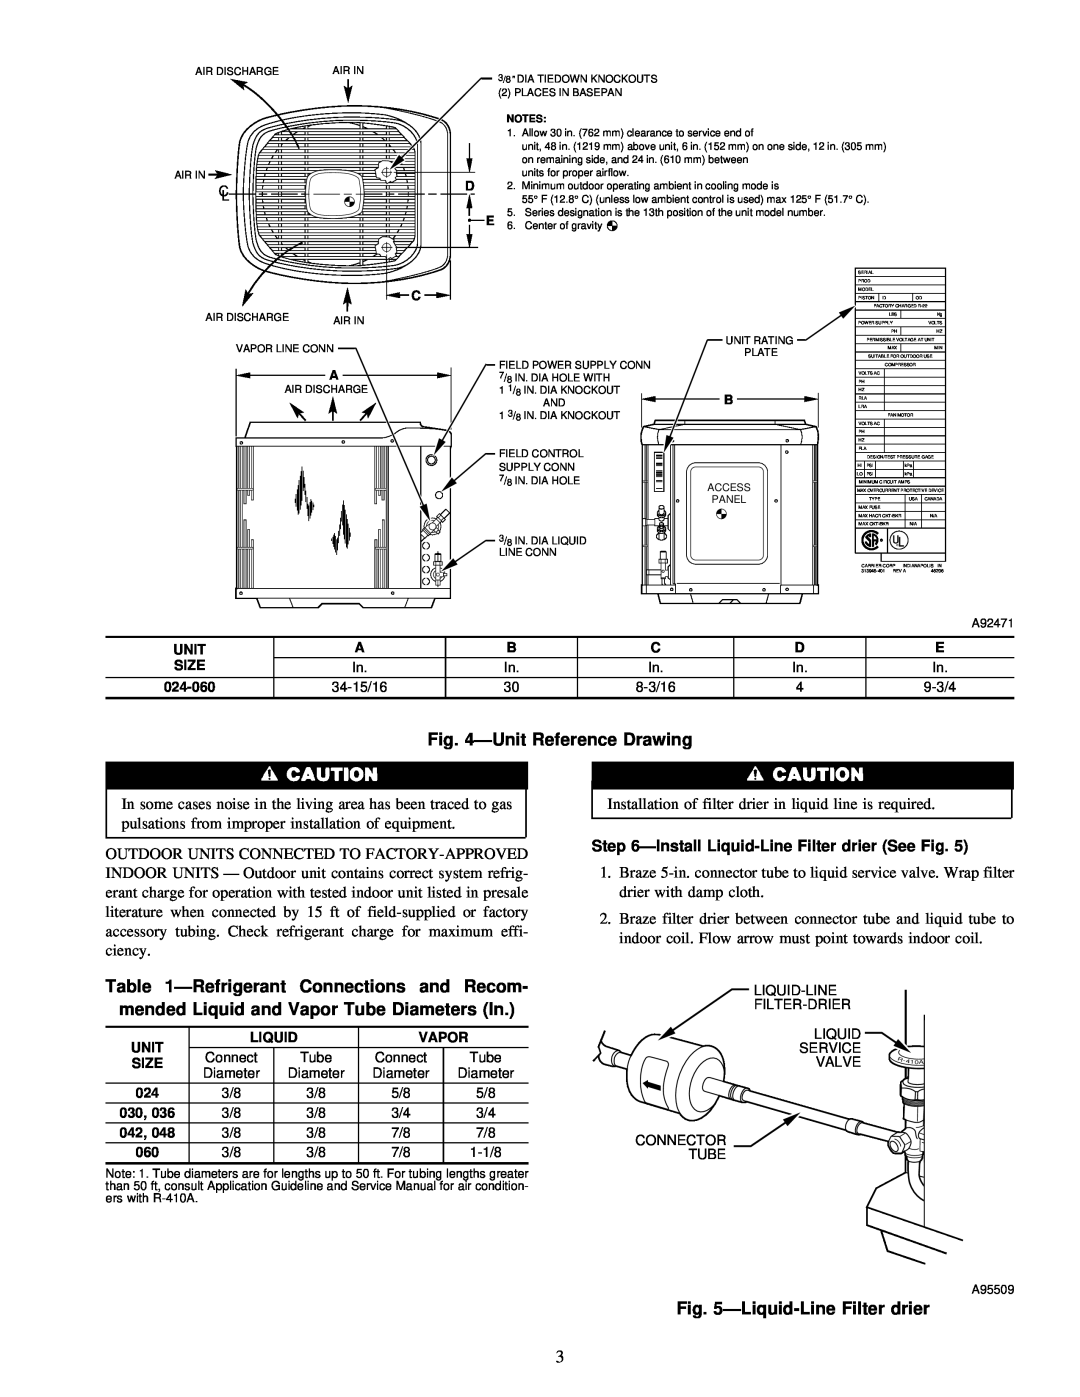 Carrier 38TXA ÐUnit Reference Drawing, ÐLiquid-LineFilter drier, ÐInstall Liquid-LineFilter drier See Fig 